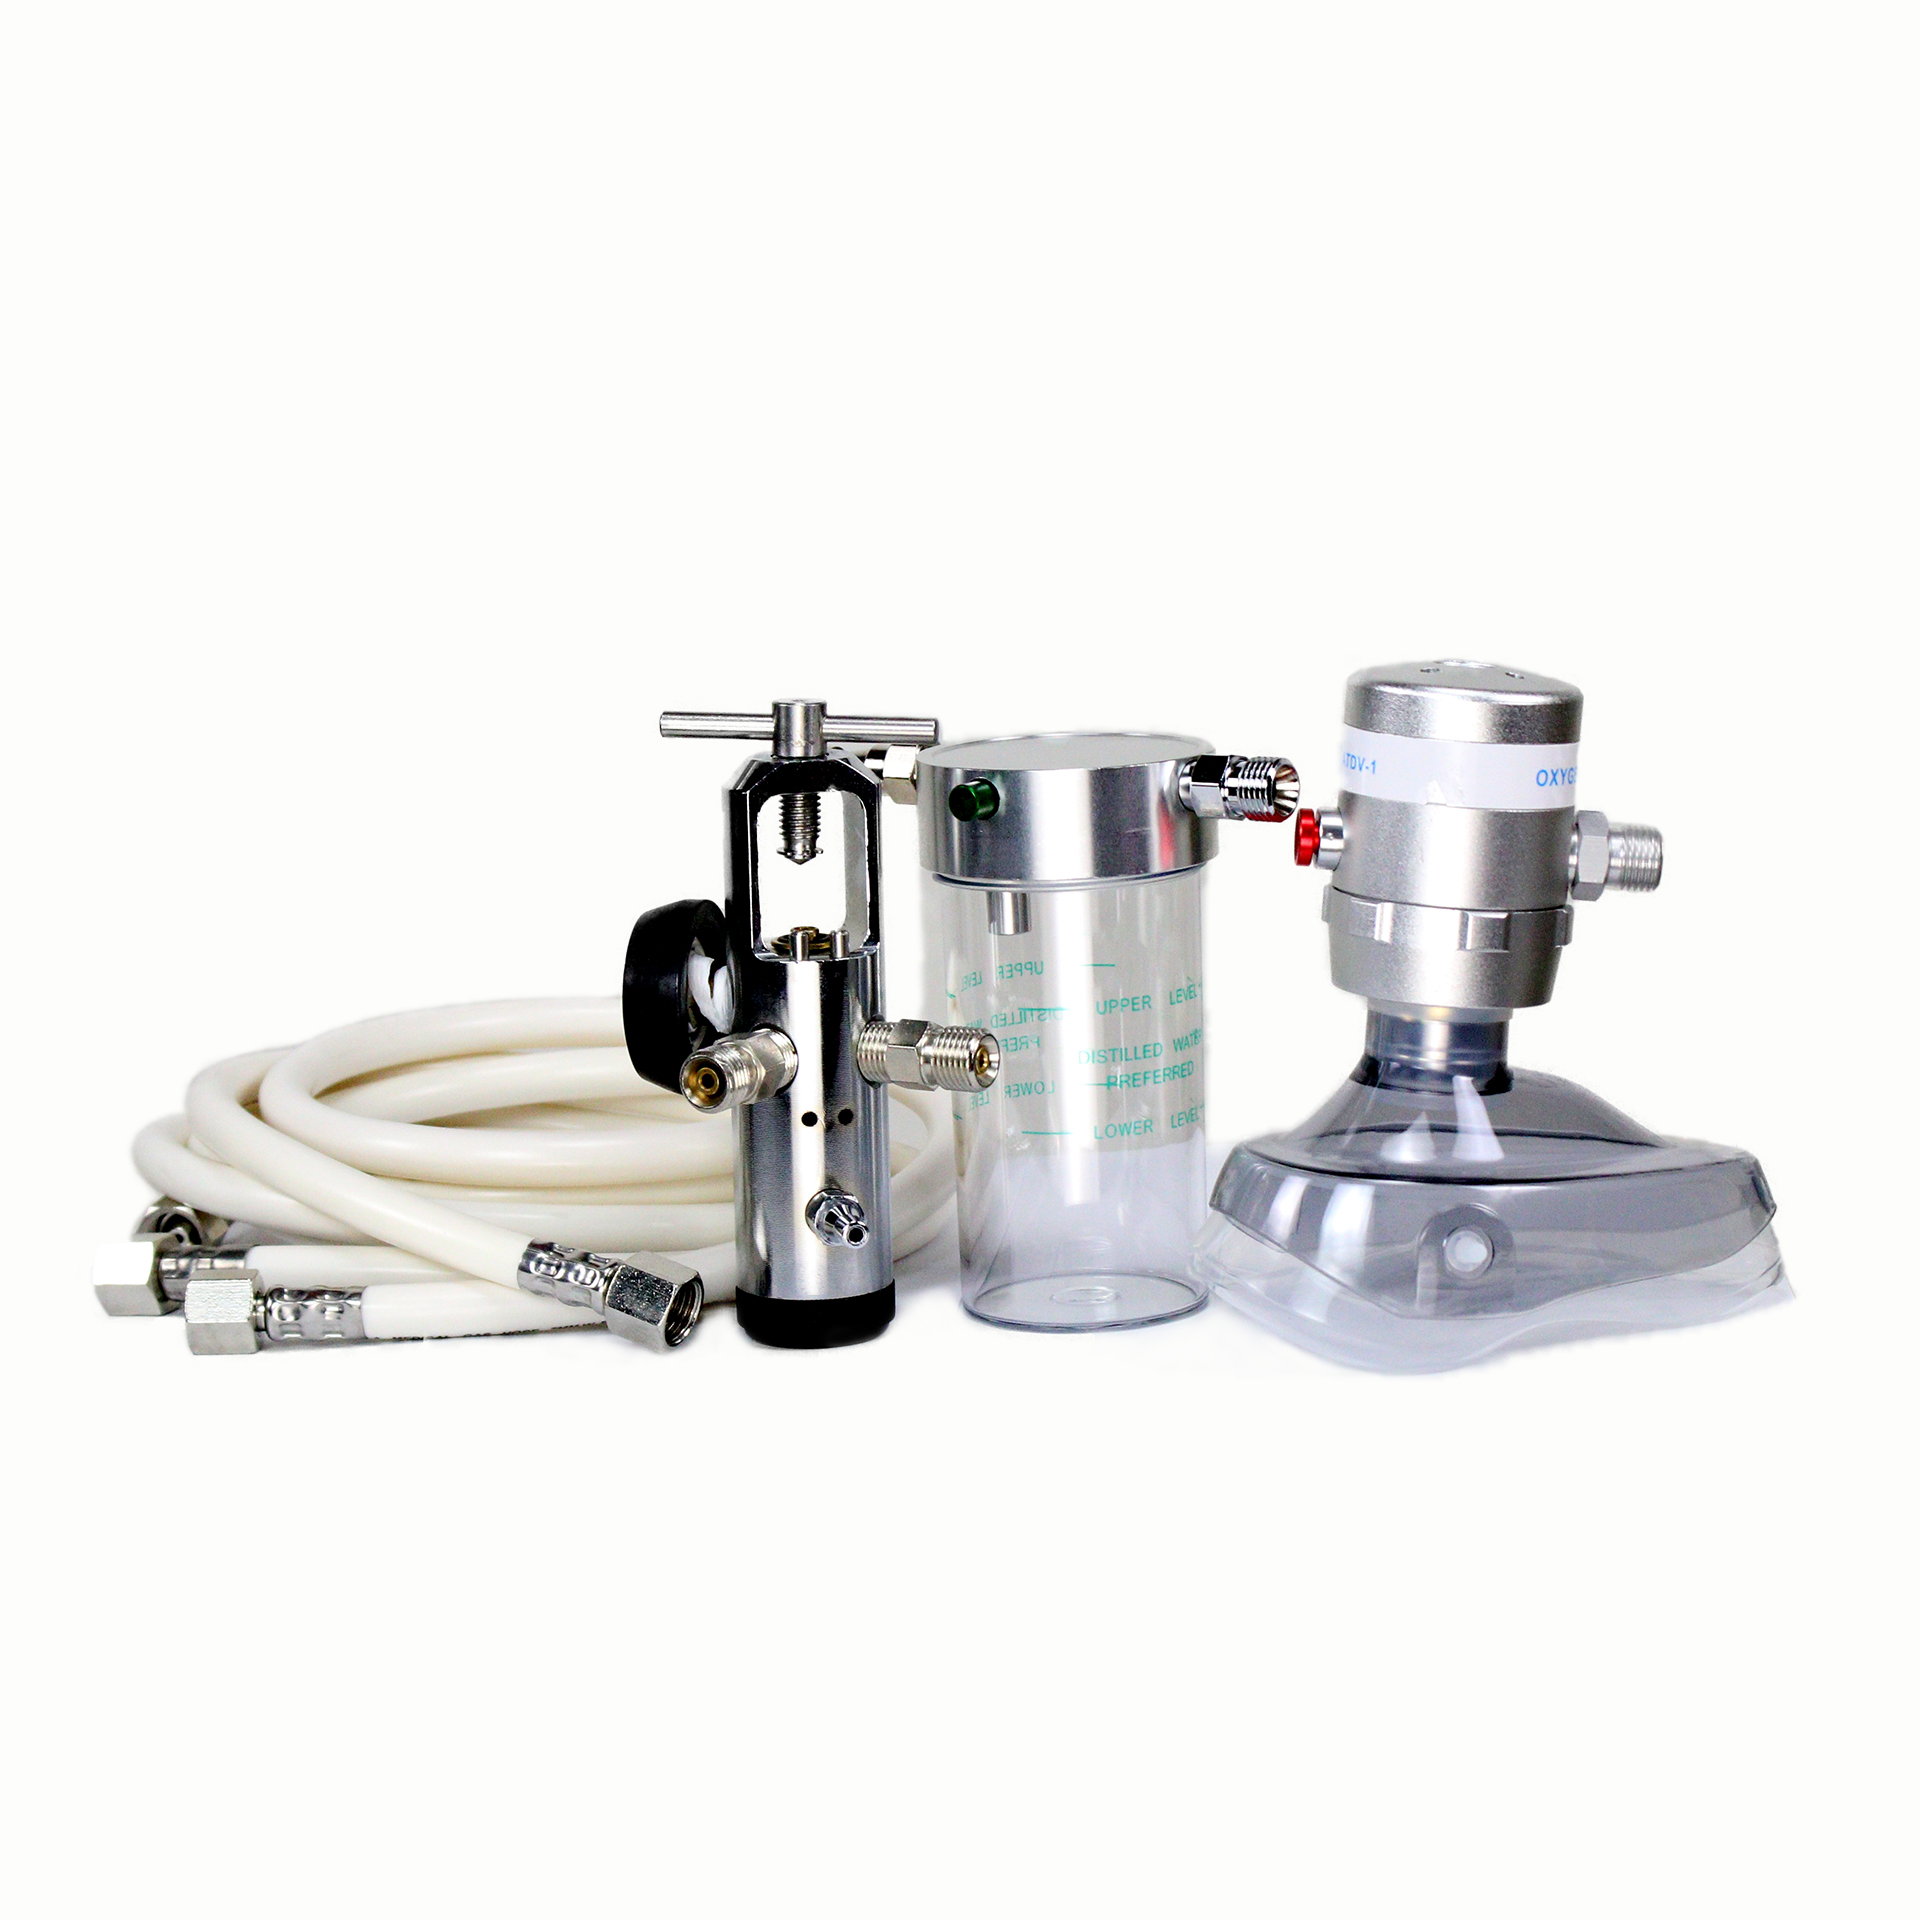 Oxygen demand valve set with suction jar delivering pure oxygen